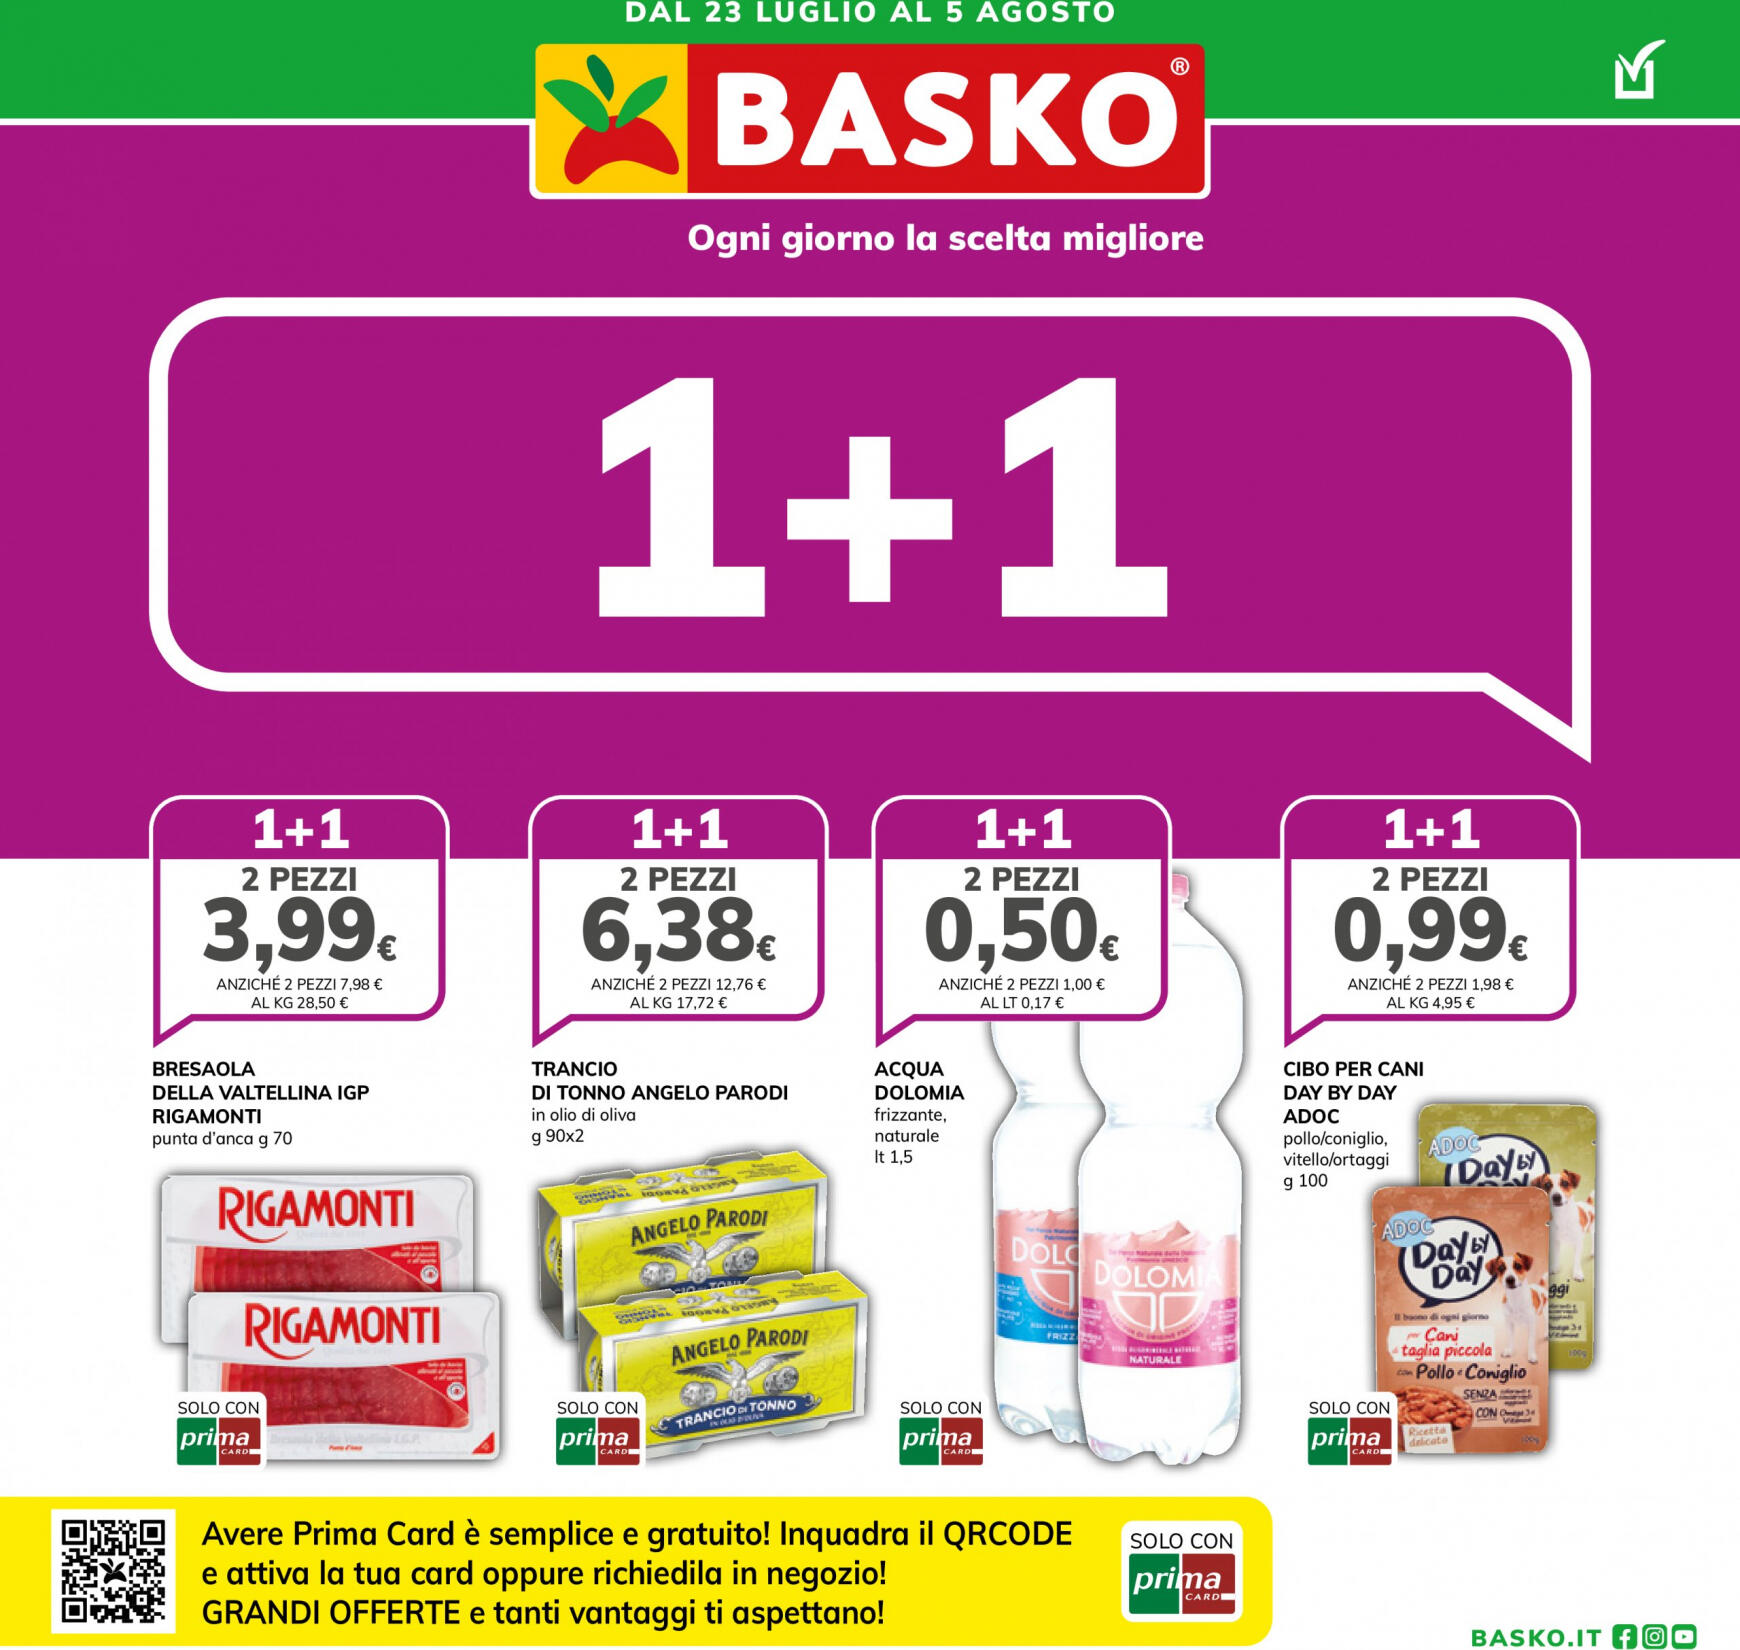 basko - Nuovo volantino Basko - Promozione 1+1 23.07. - 05.08.